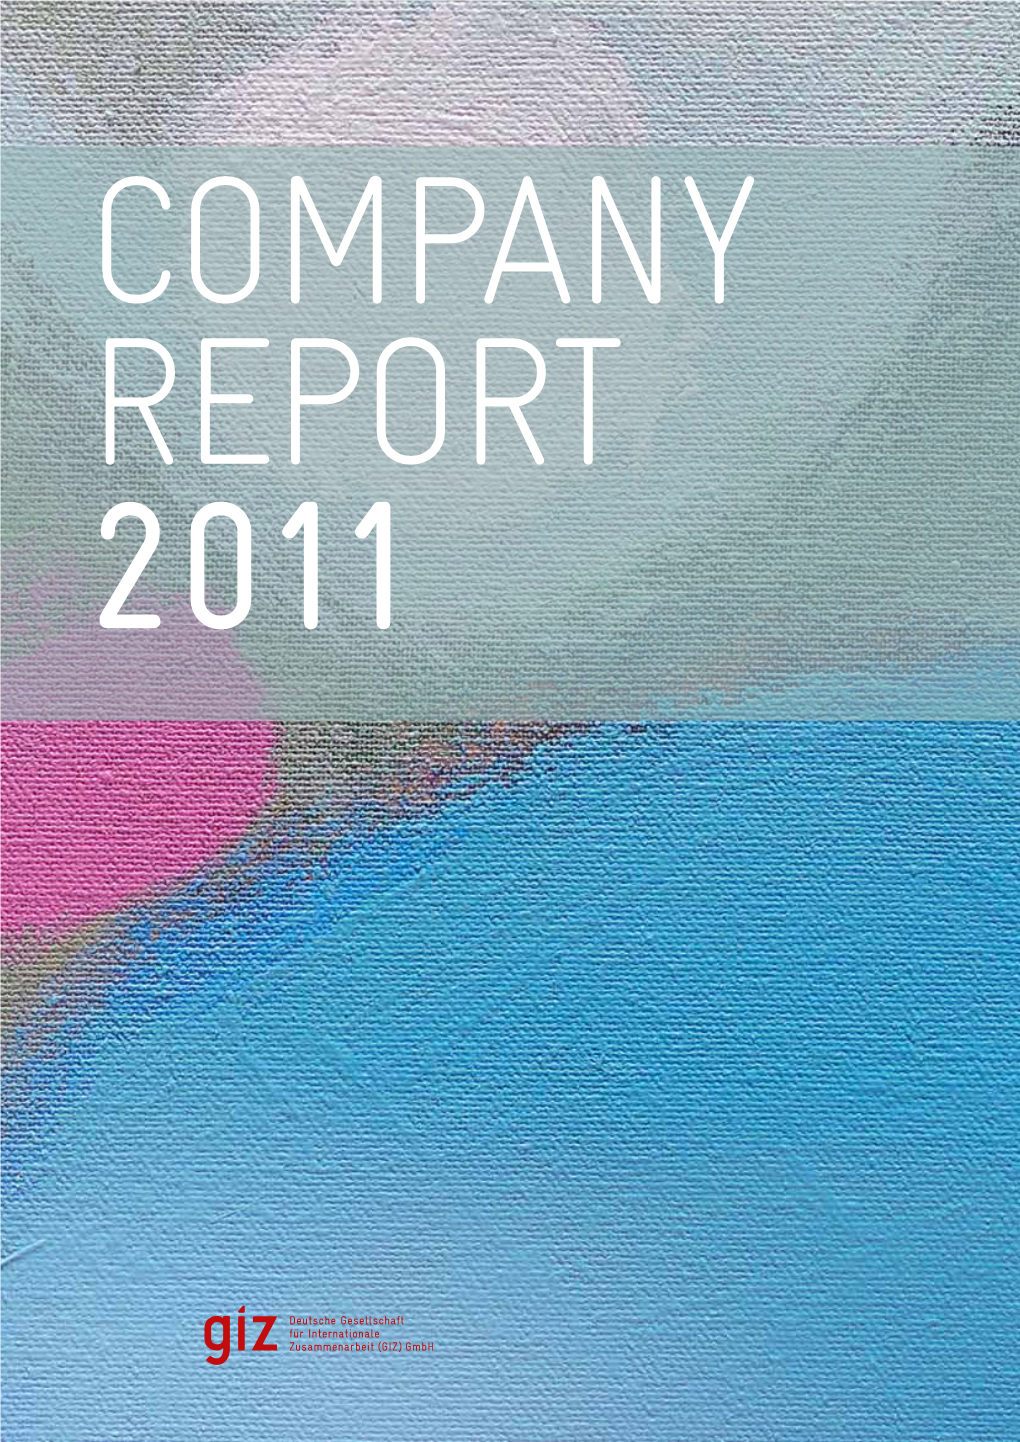 G I Z Company Report 2011